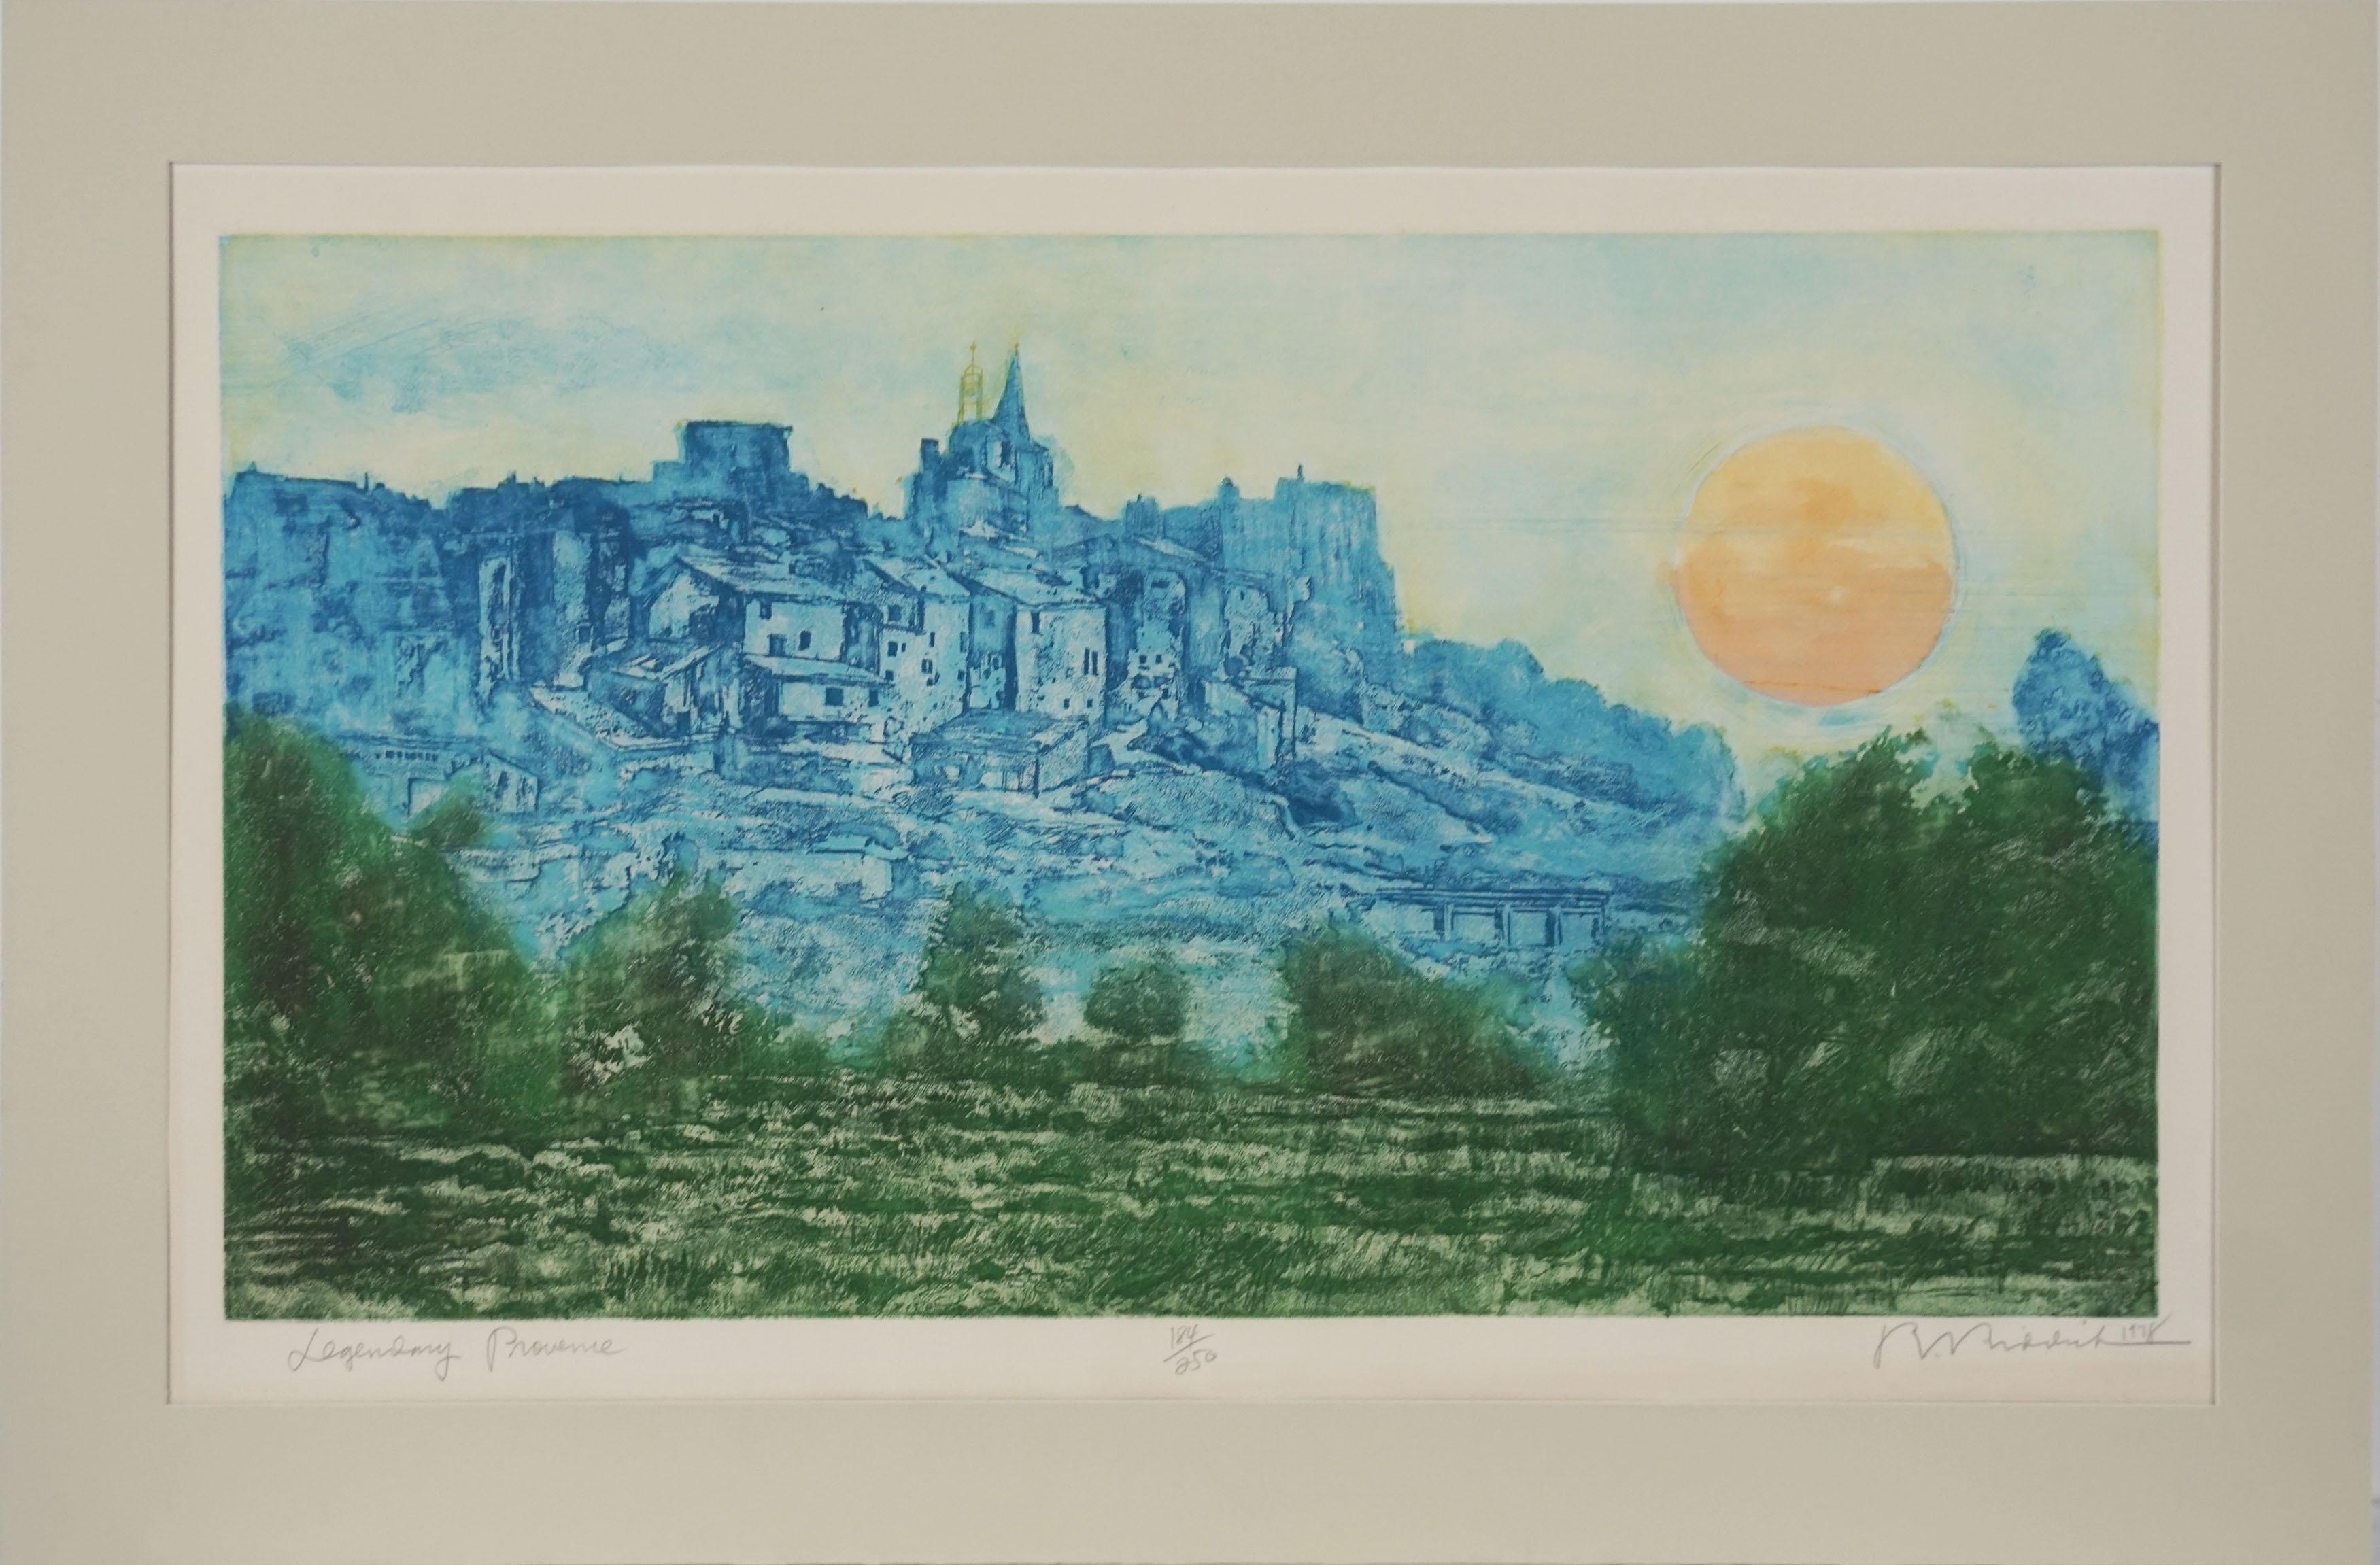 Ronald Stephen Riddick Landscape Print - Provence, France Fine Art Aquatint Etching - “Legendary Provence"